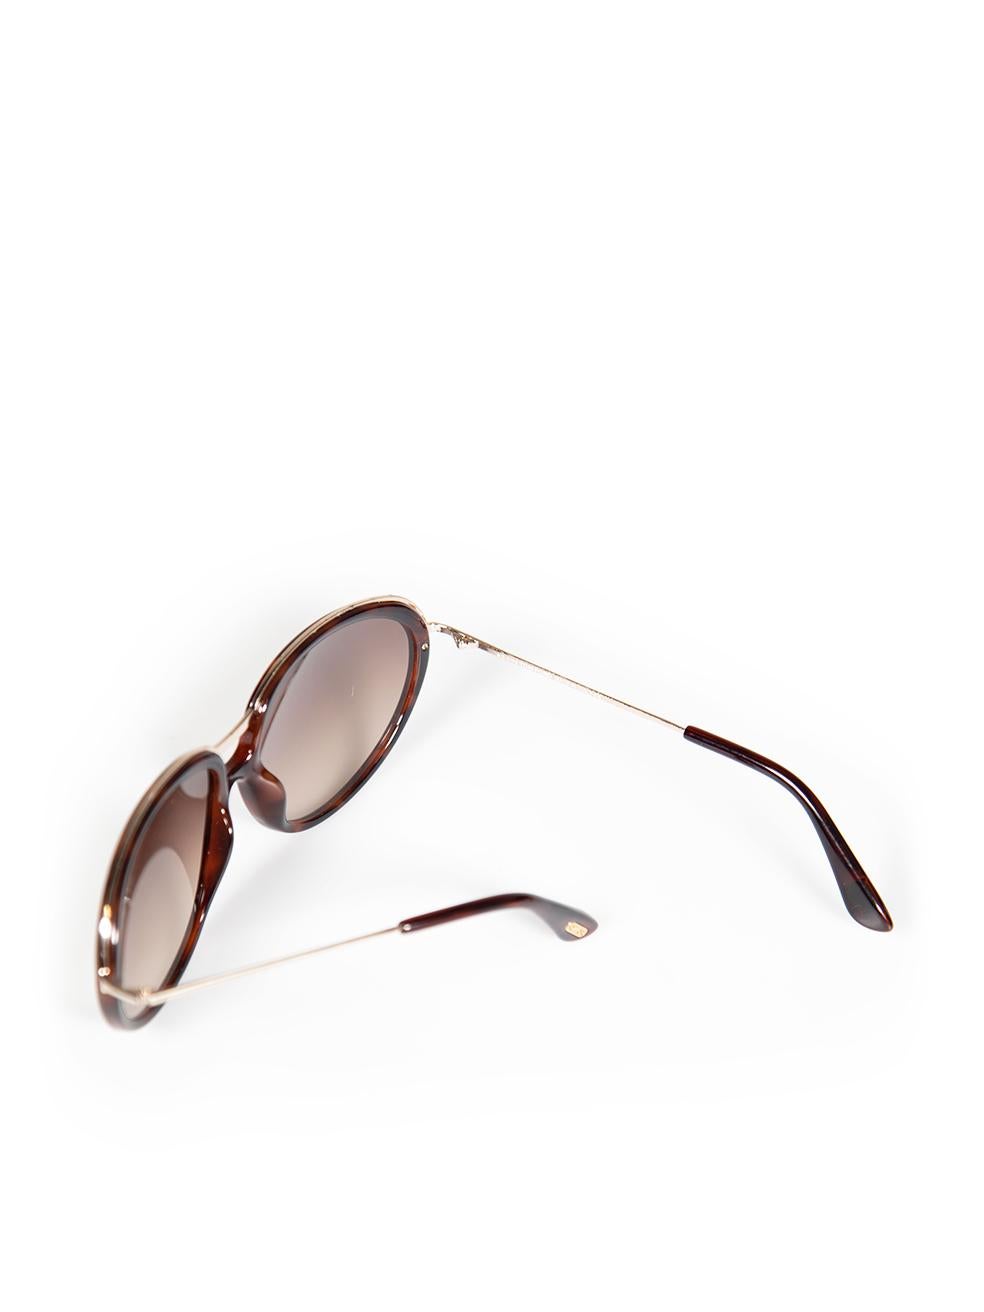 Tom Ford Dark Havana Gradient Sunglasses For Sale 3